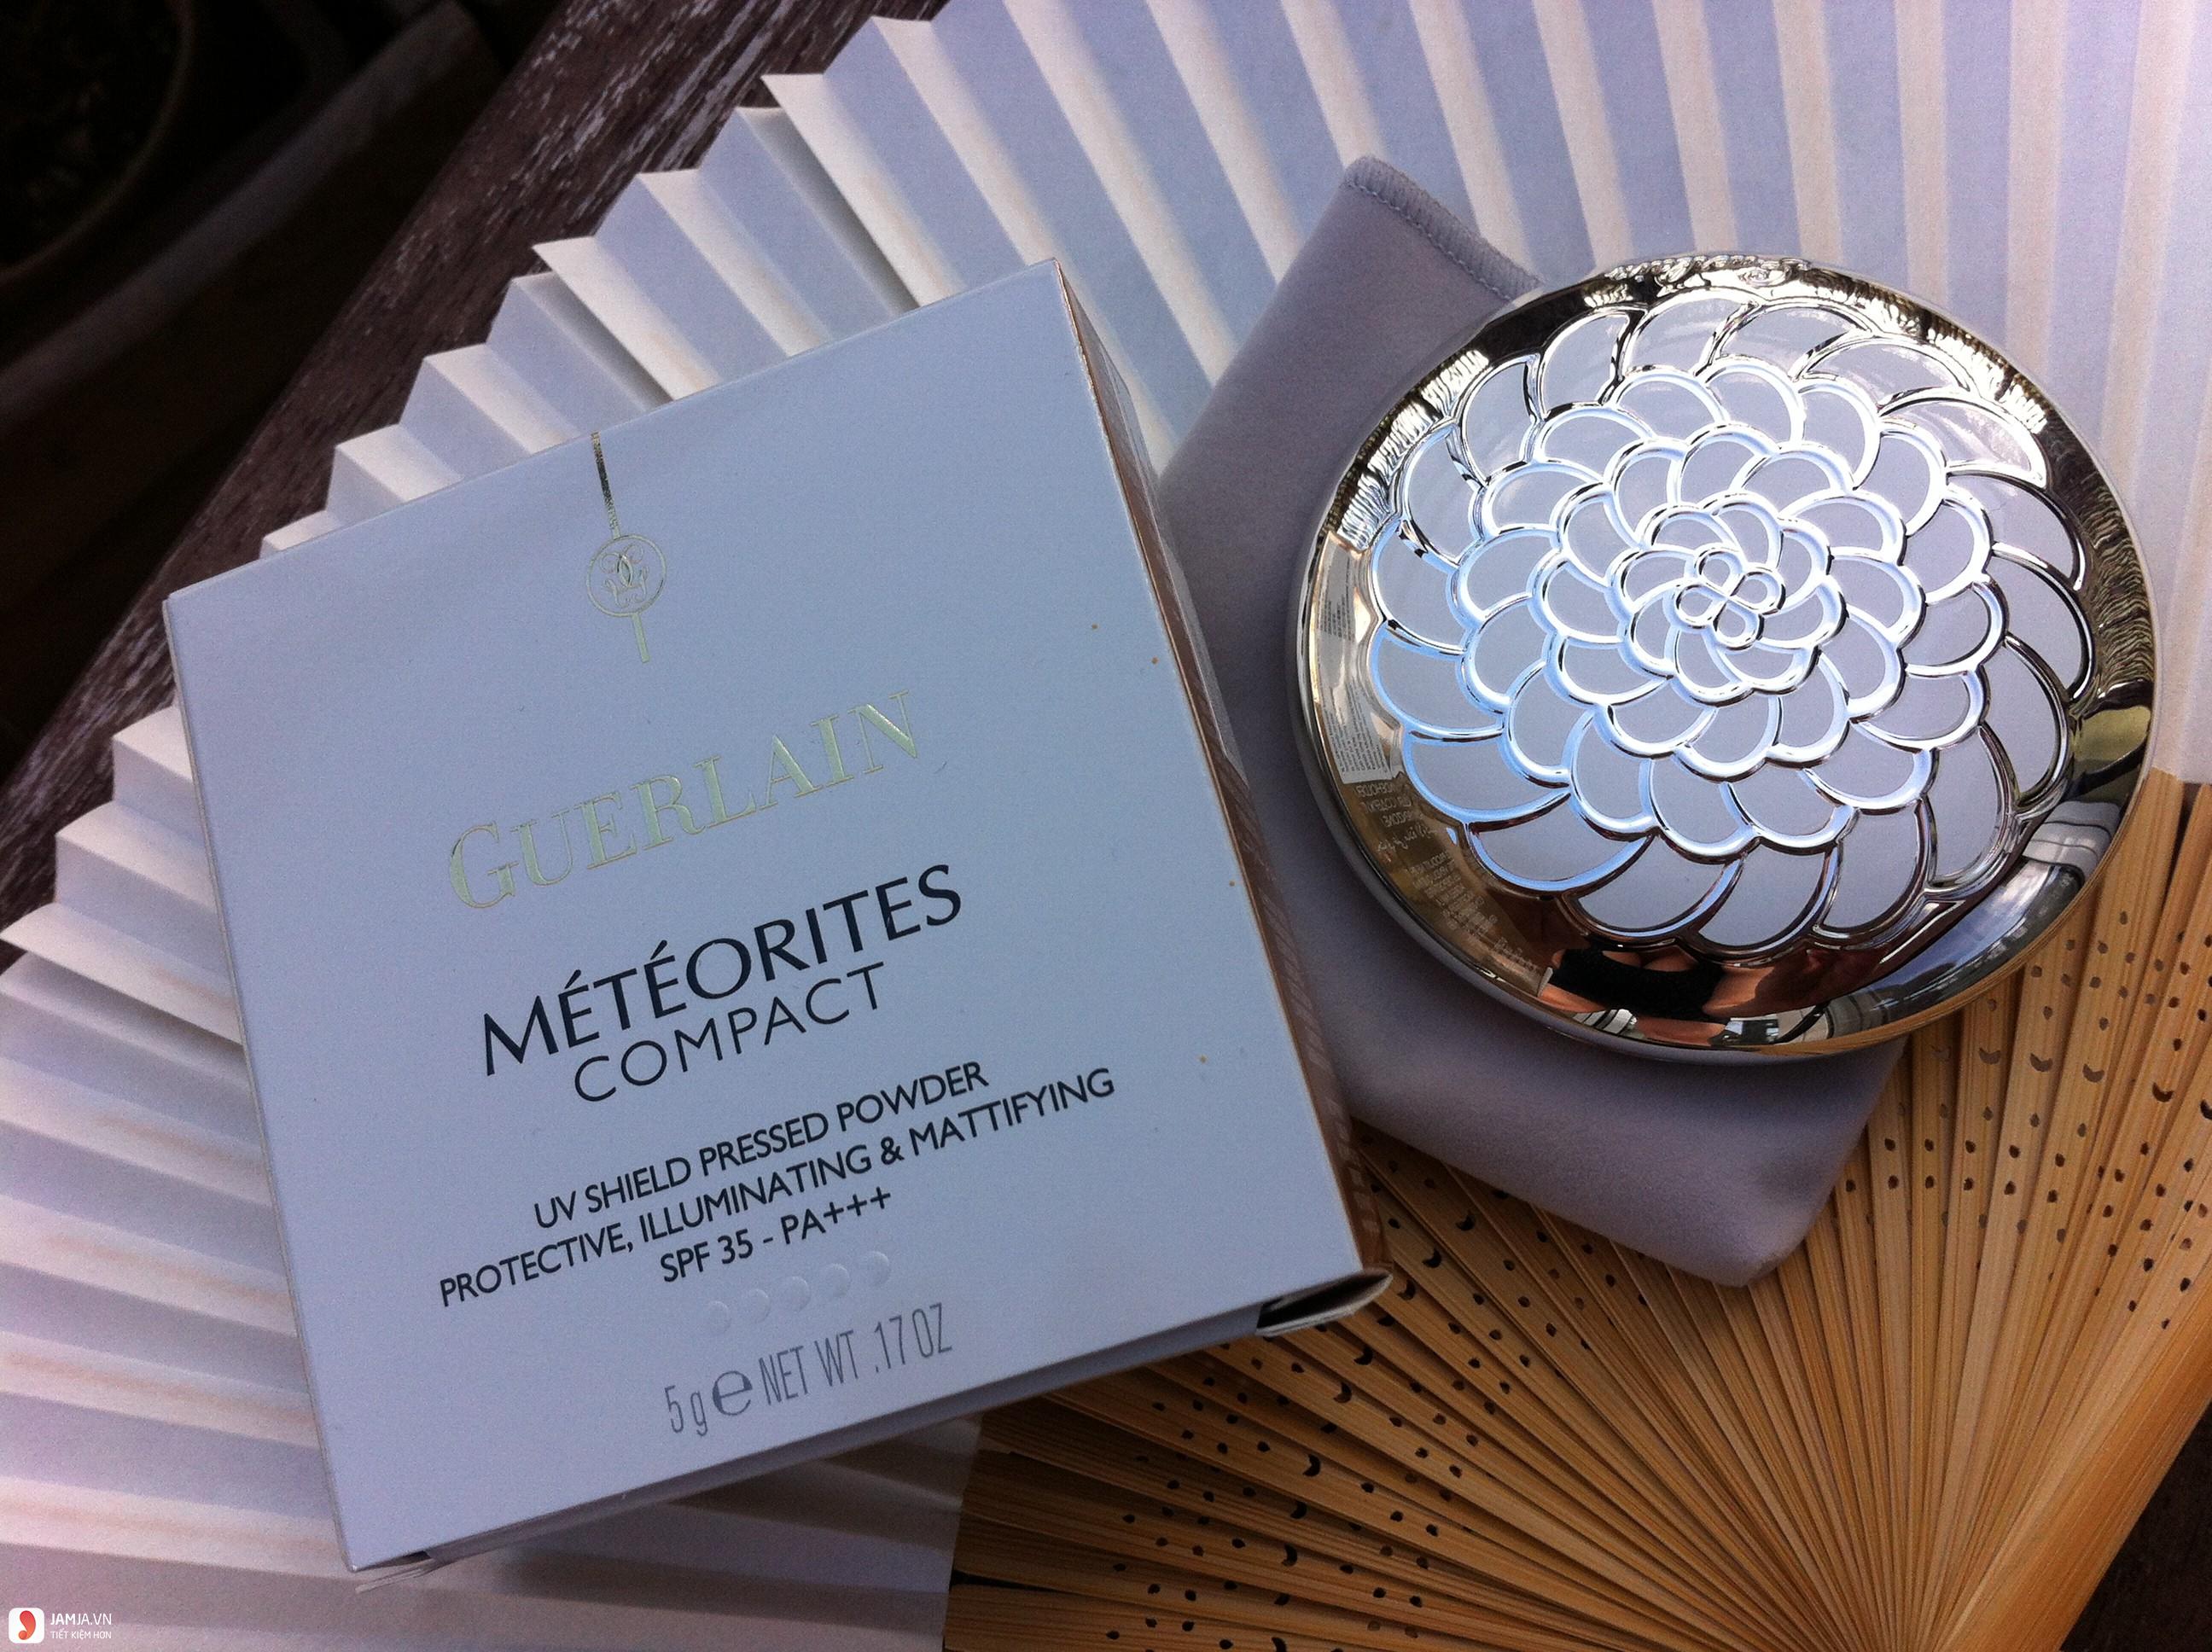 Guerlain Meteorites Compact UV Shield Pressed Powder 3